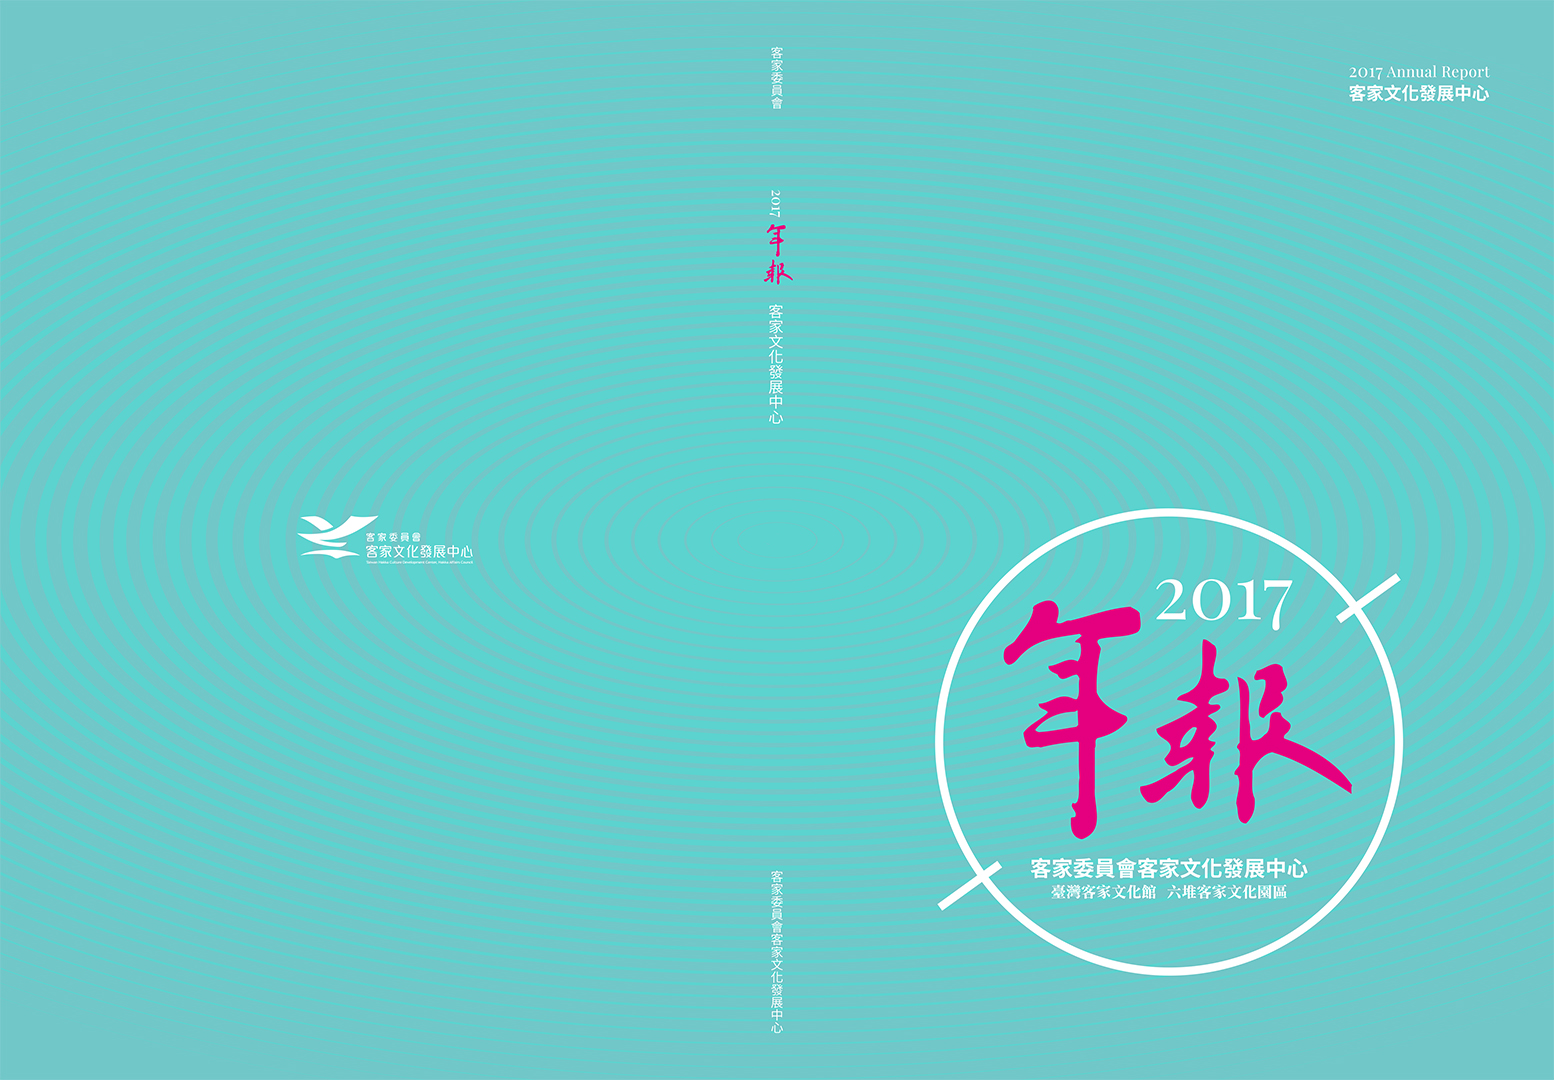 2017 Annual Report of the Taiwan Hakka Culture Development Center, Hakka Affairs Council 展示圖